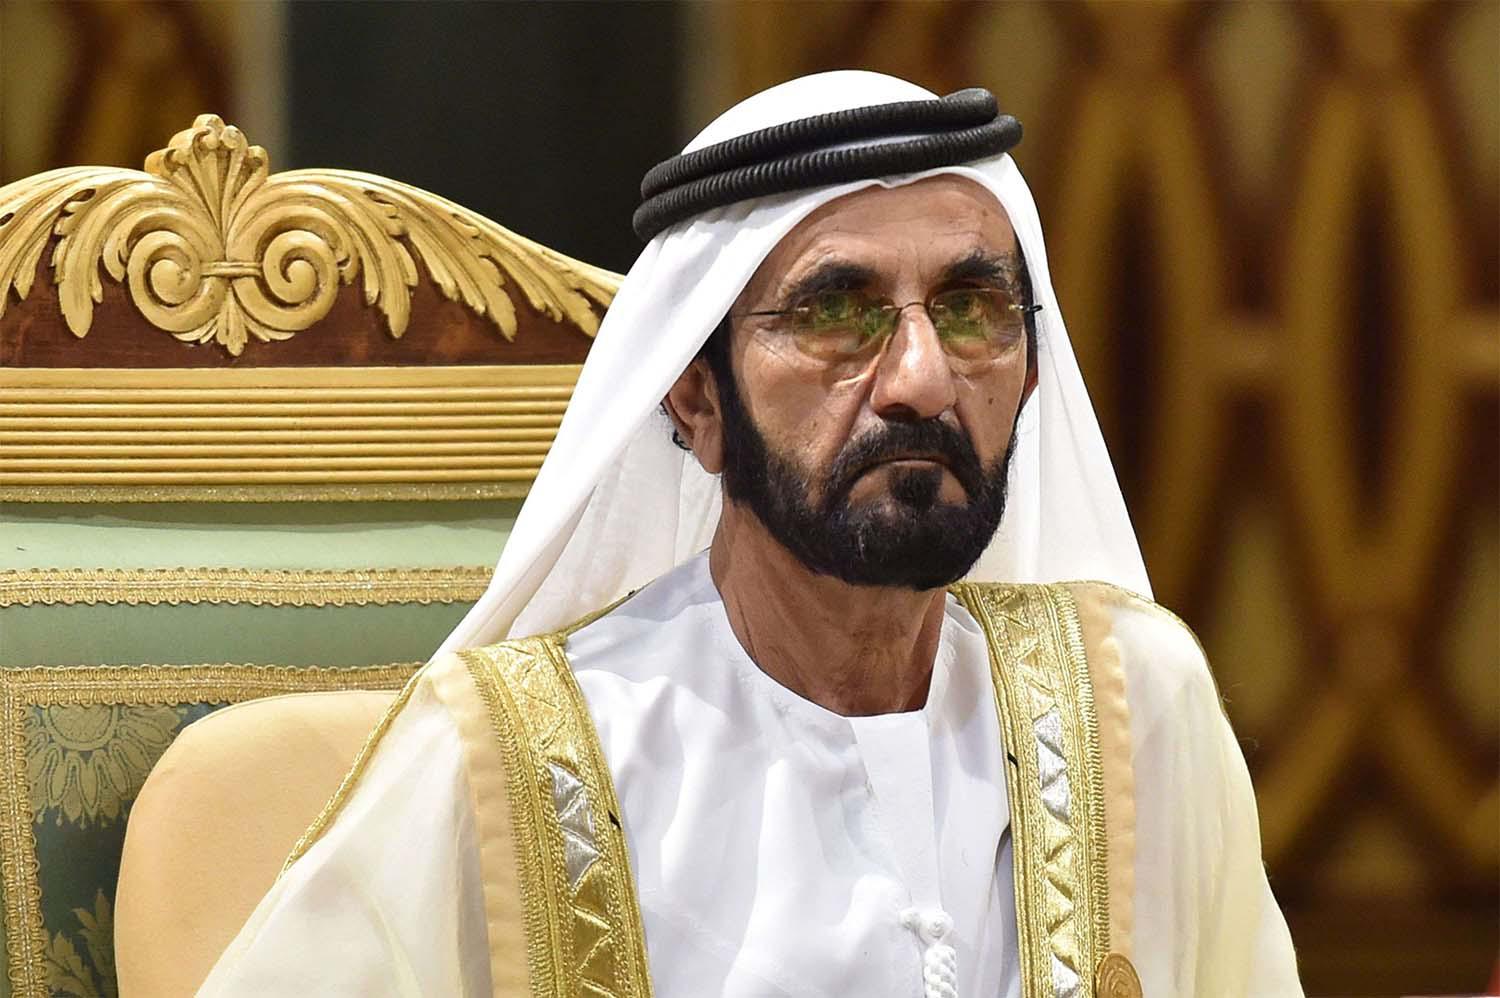 UAE Vice President and the ruler of Dubai Sheikh Mohammed bin Rashid al-Maktoum 